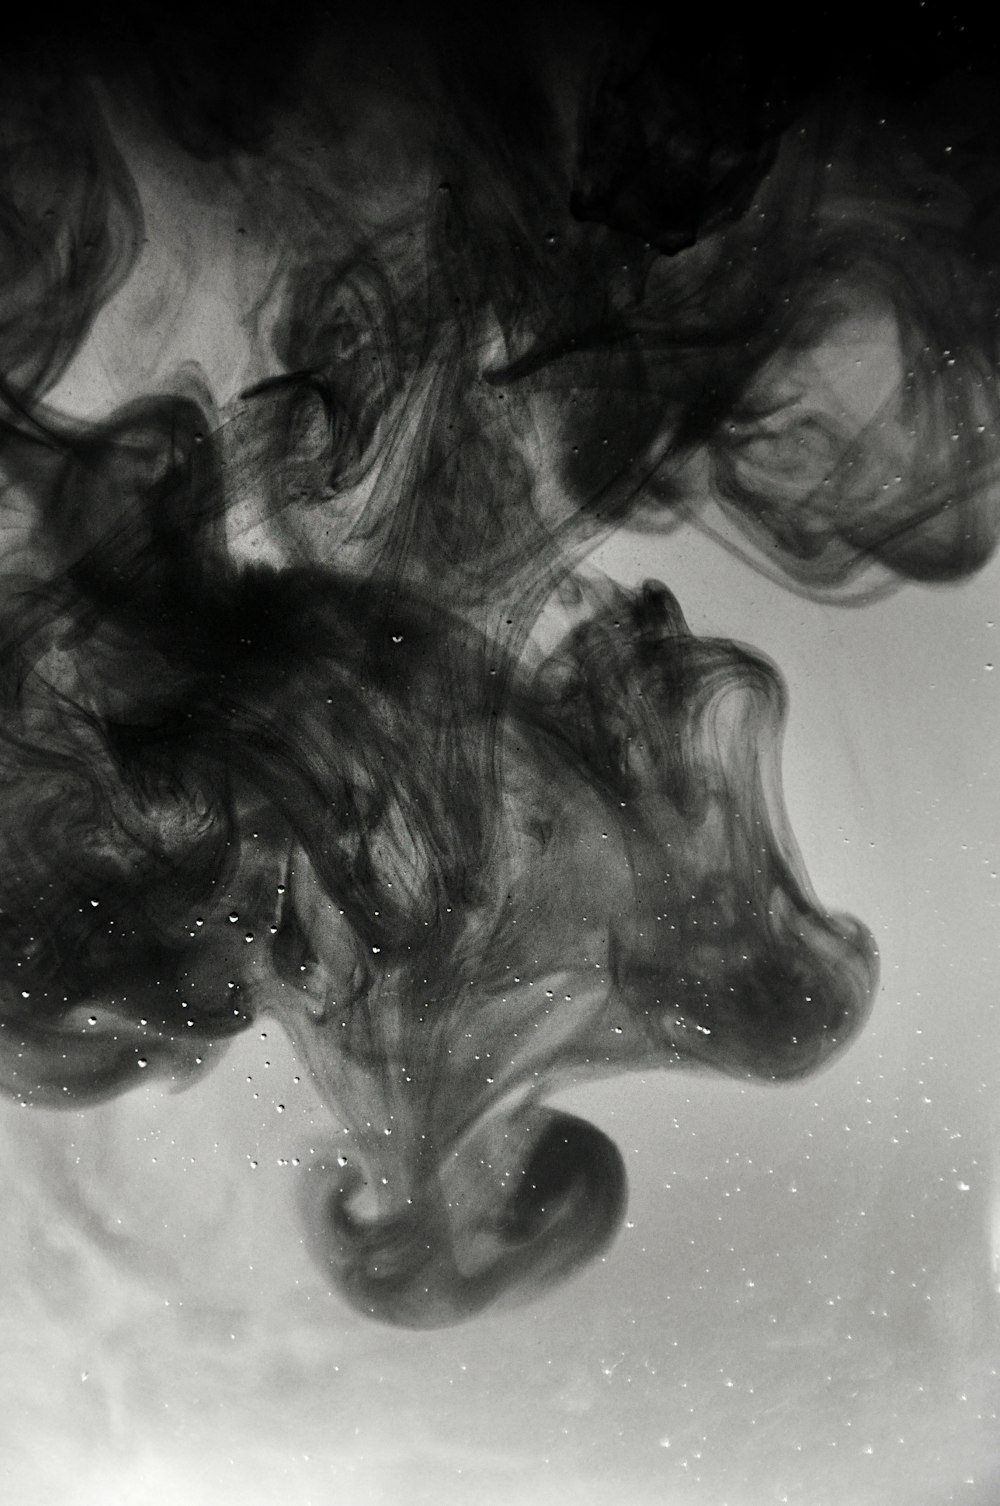 Download Gambar Black and White Smoke Wallpaper Hd terbaru 2020